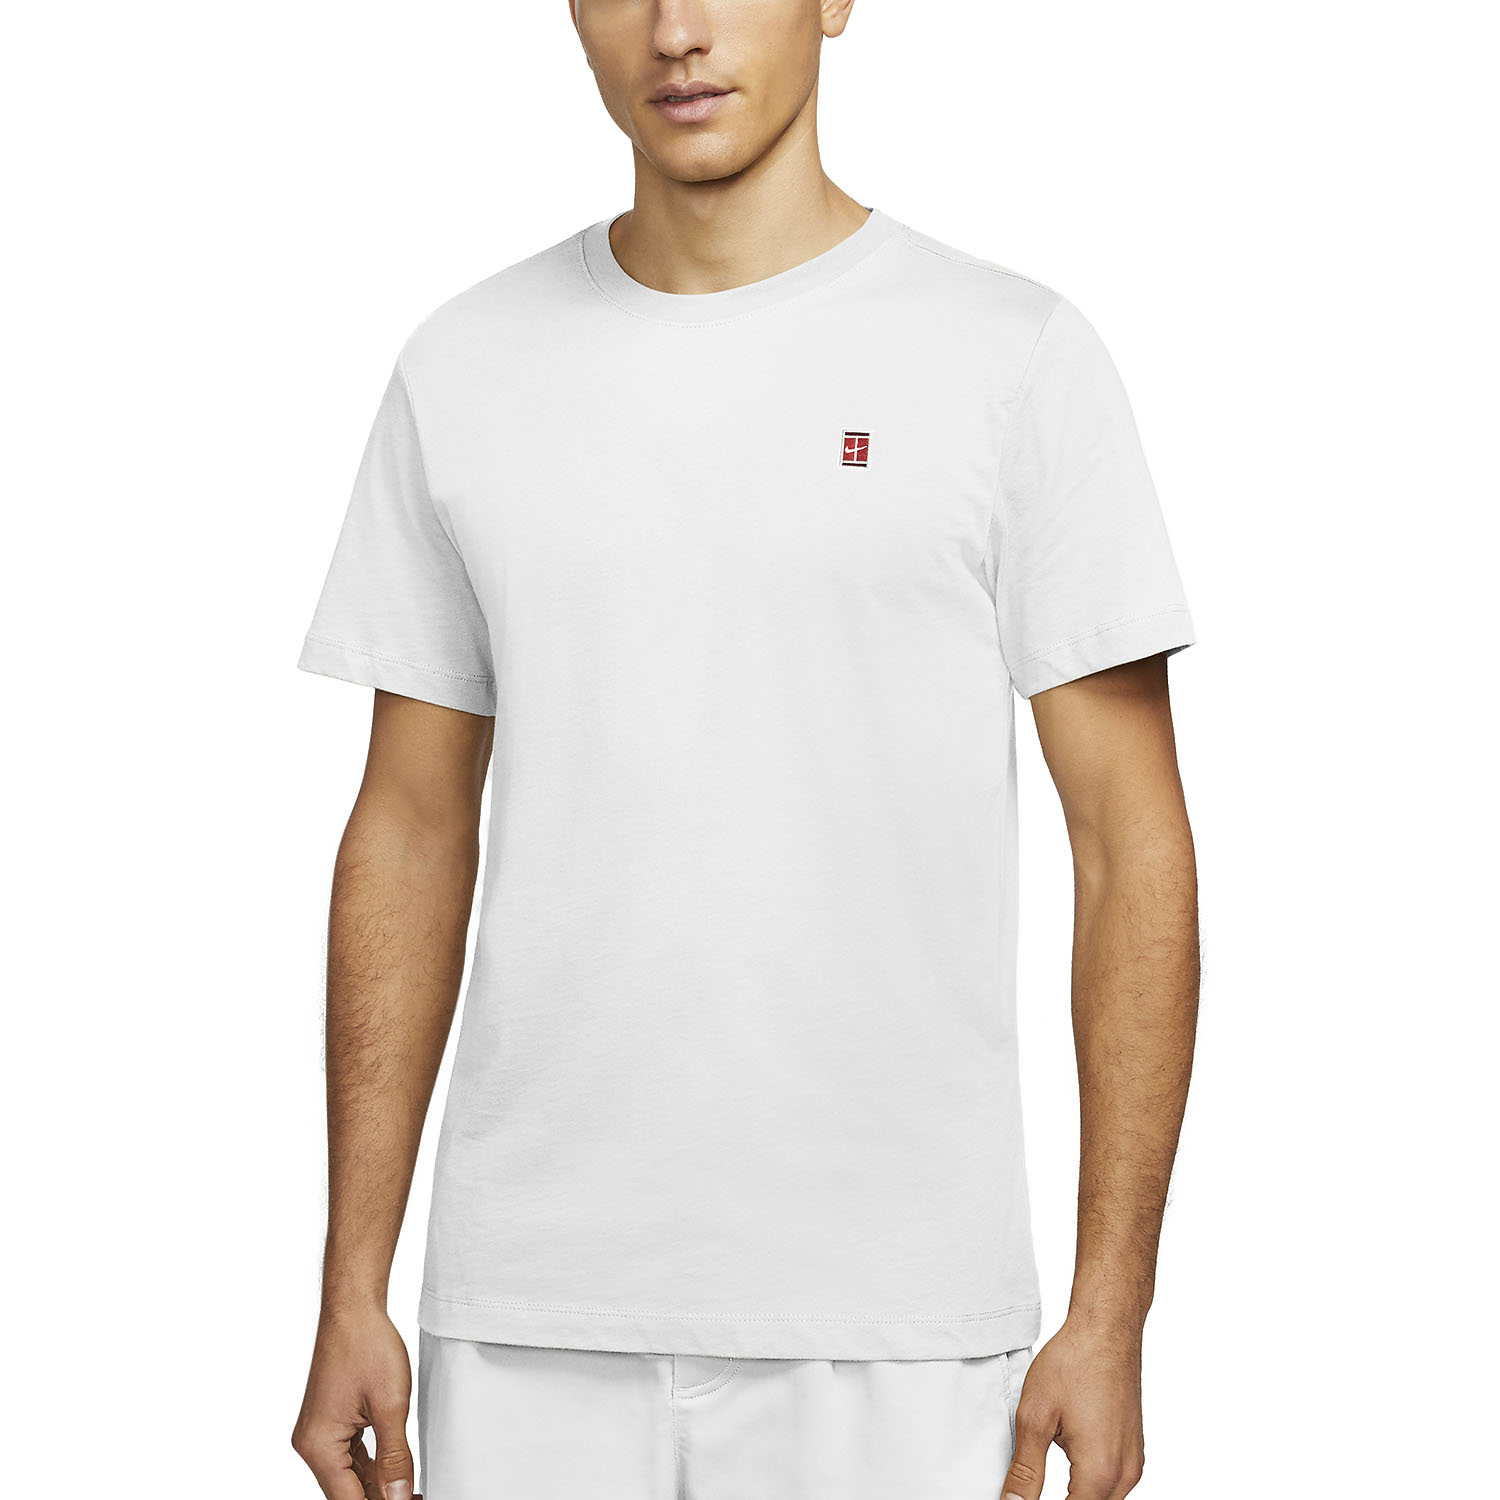 Factibilidad salud Roux Nike Court Camiseta de Tenis Hombre - White/Habanero Red